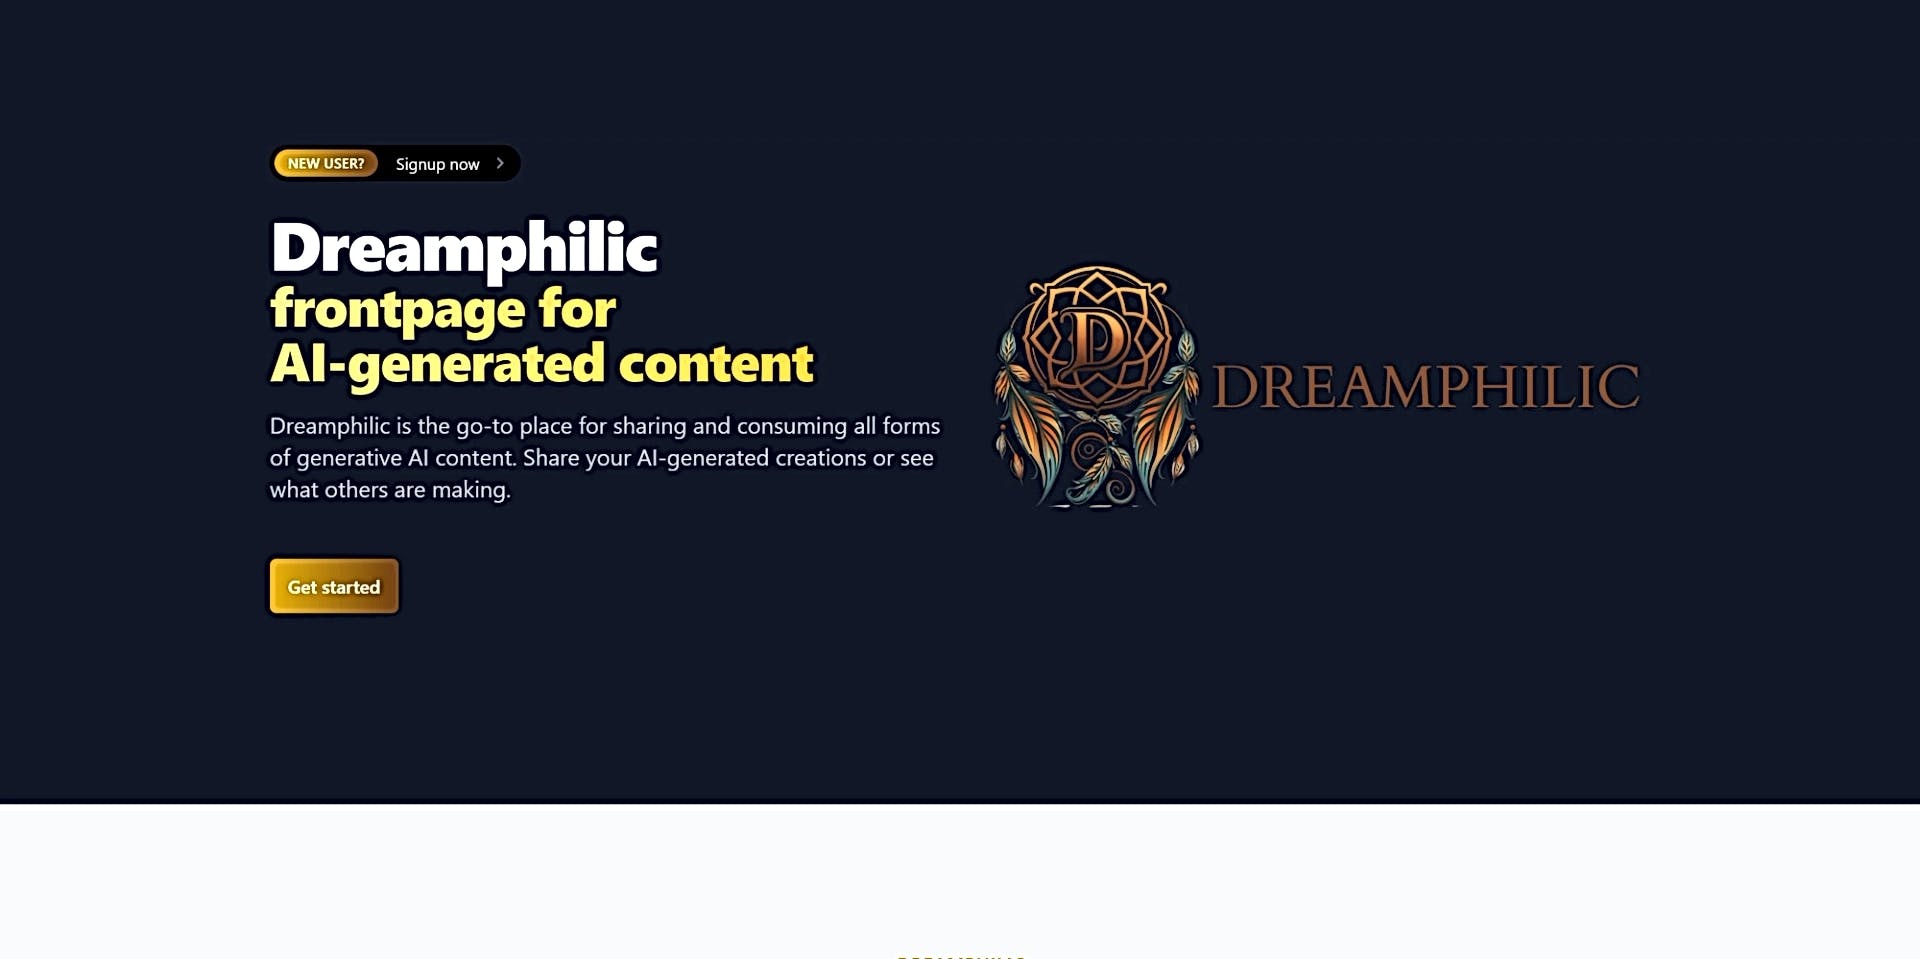 Dreamphilic featured